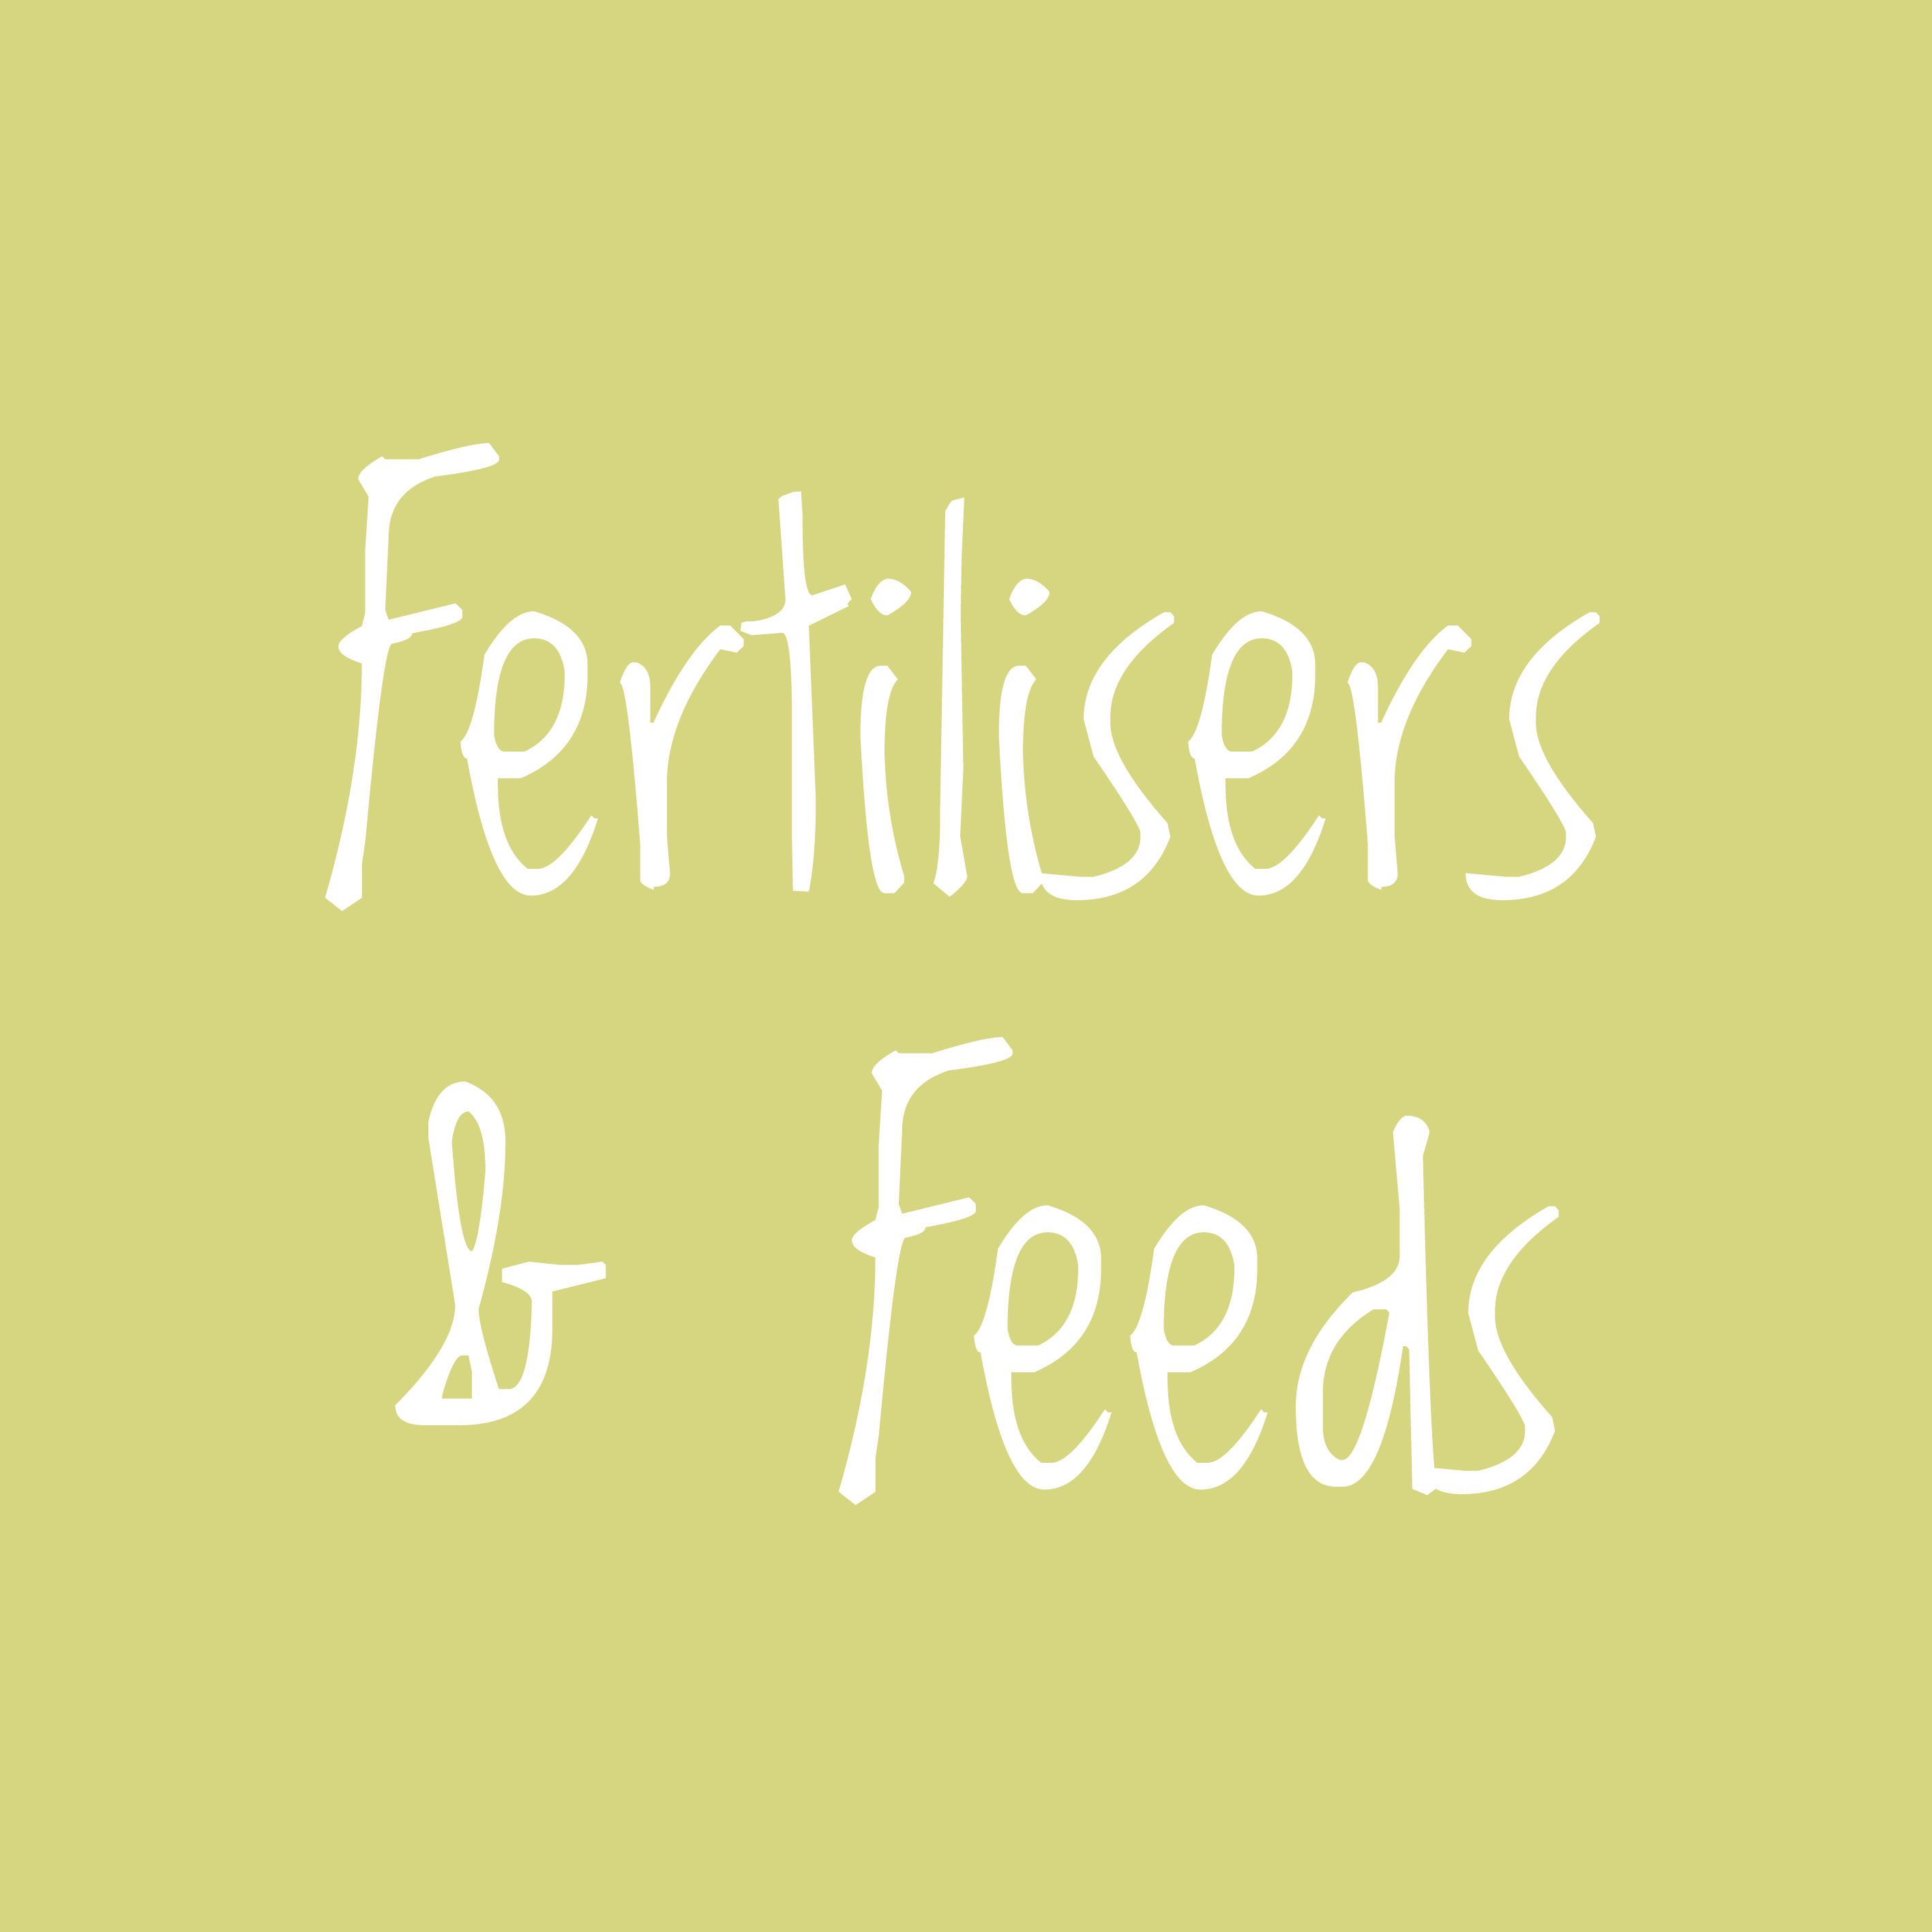 Fertilisers & Feeds